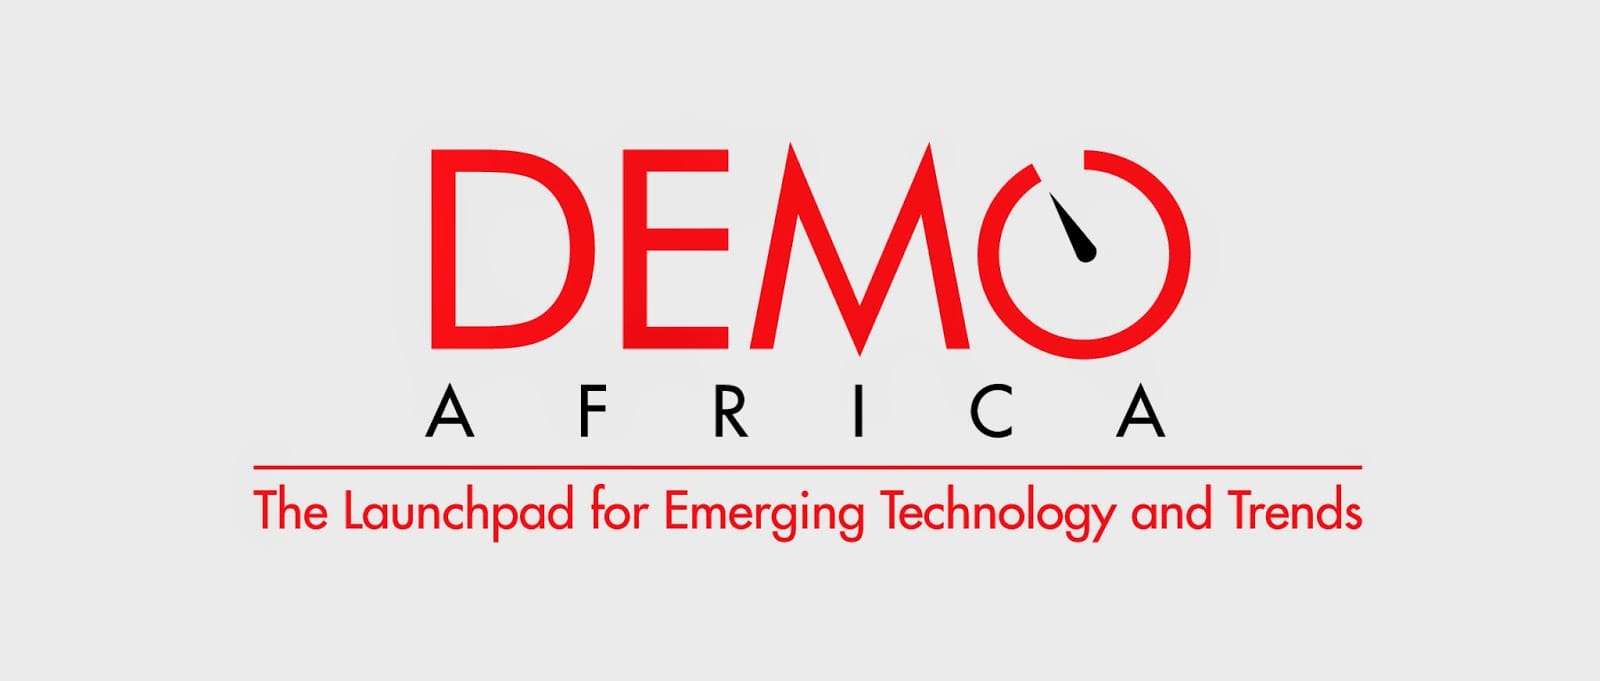 demo africa 2015